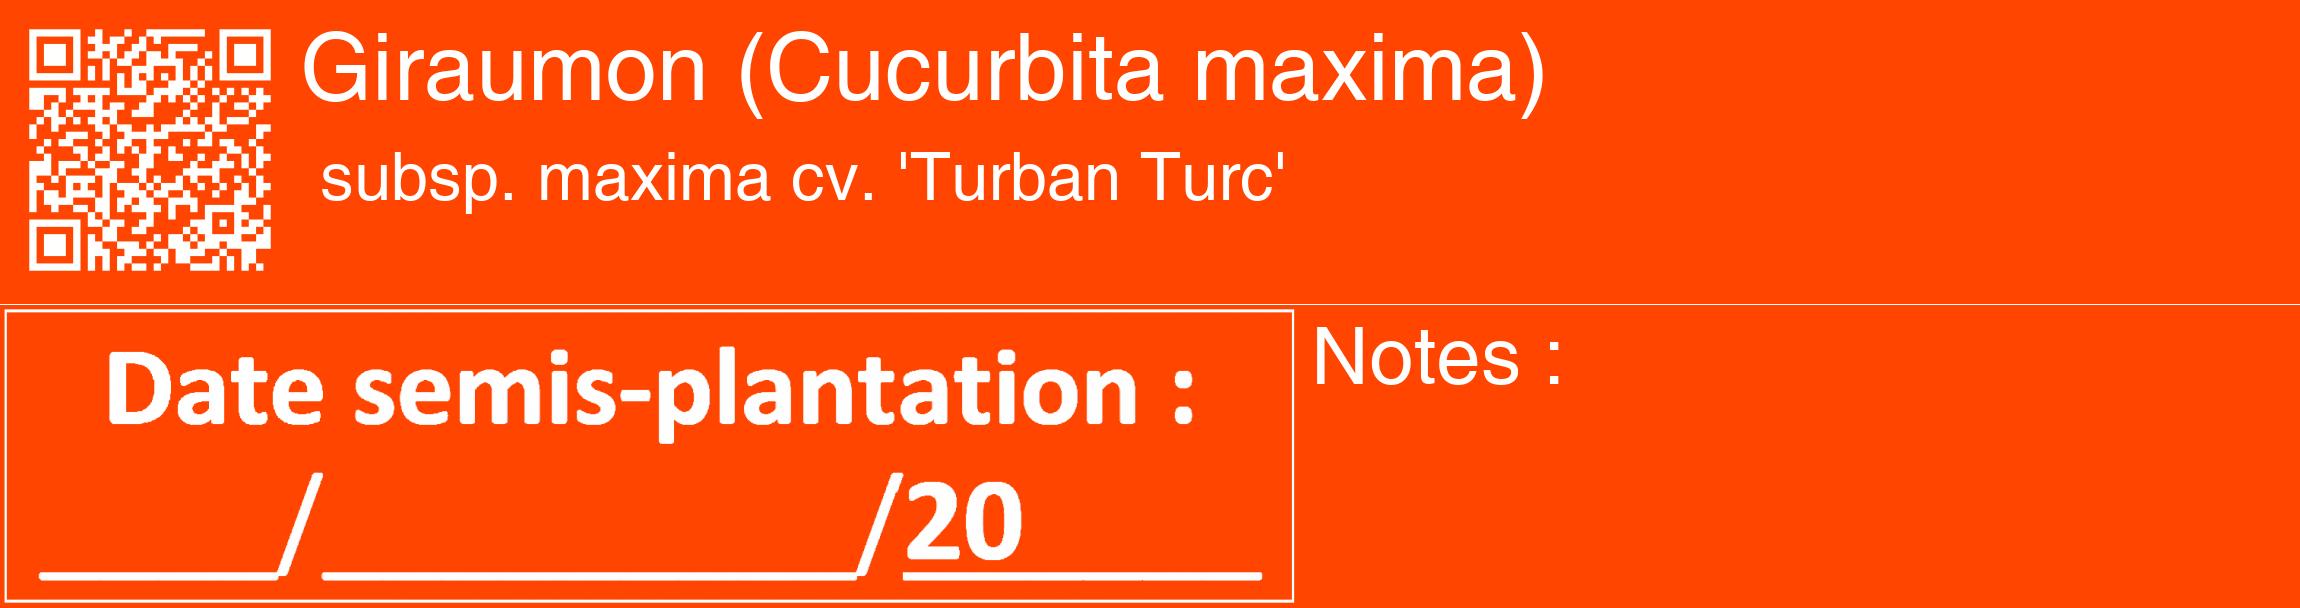 Étiquette de : Cucurbita maxima subsp. maxima cv. 'Turban Turc' - format c - style blanche26_basique_basiquehel avec qrcode et comestibilité